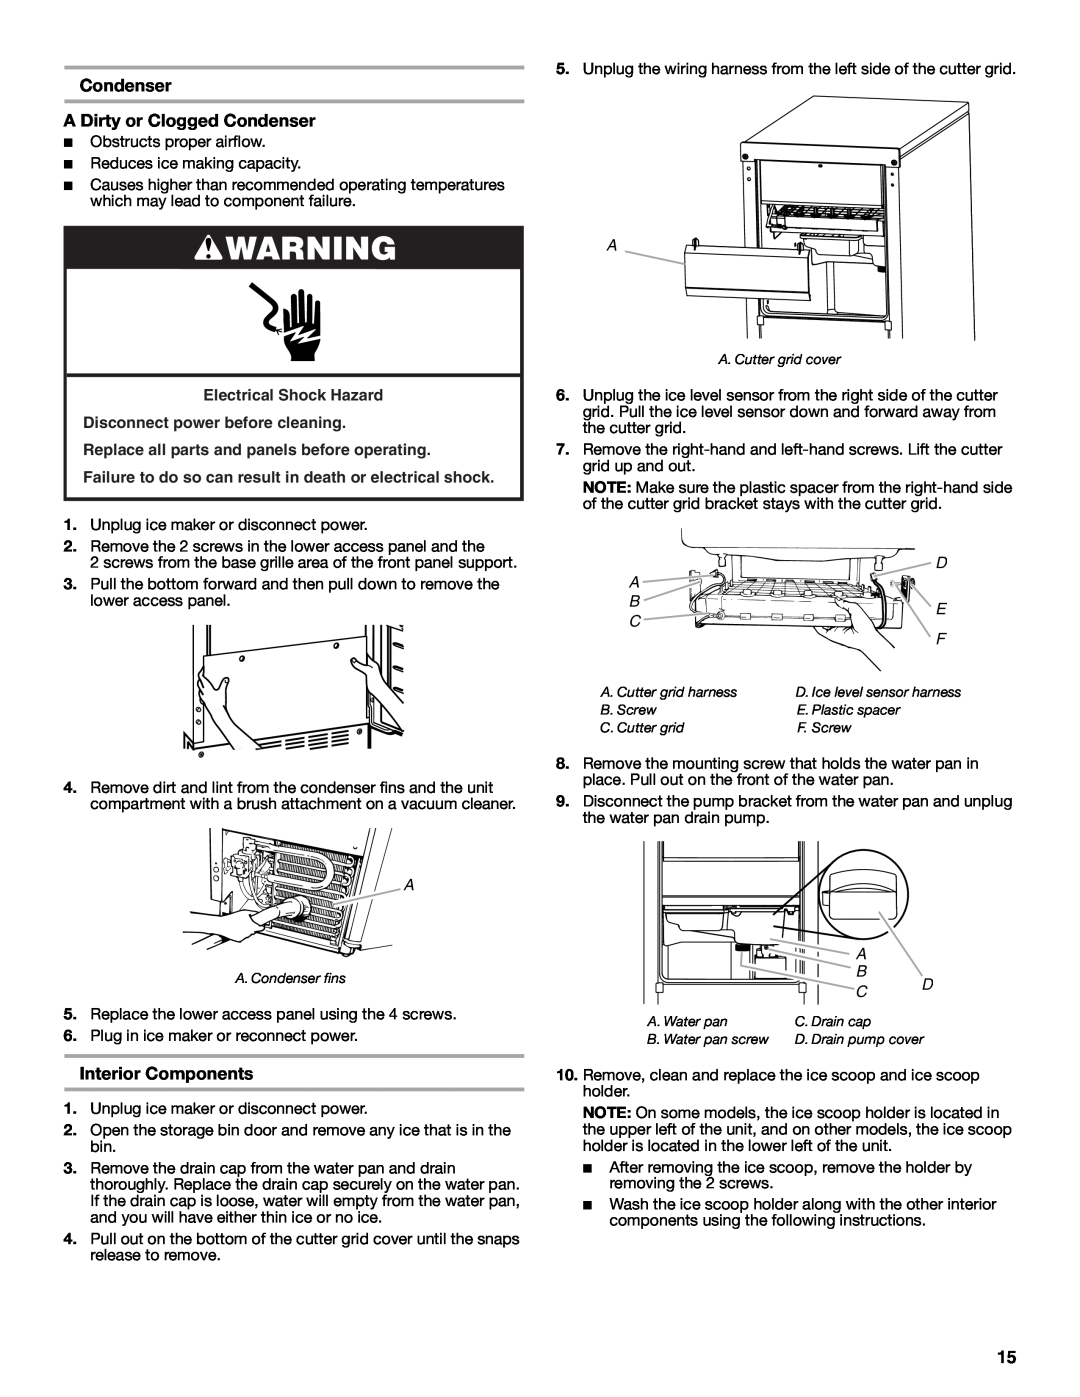 Jenn-Air W10519943B manual Condenser A Dirty or Clogged Condenser, Interior Components, Electrical Shock Hazard 